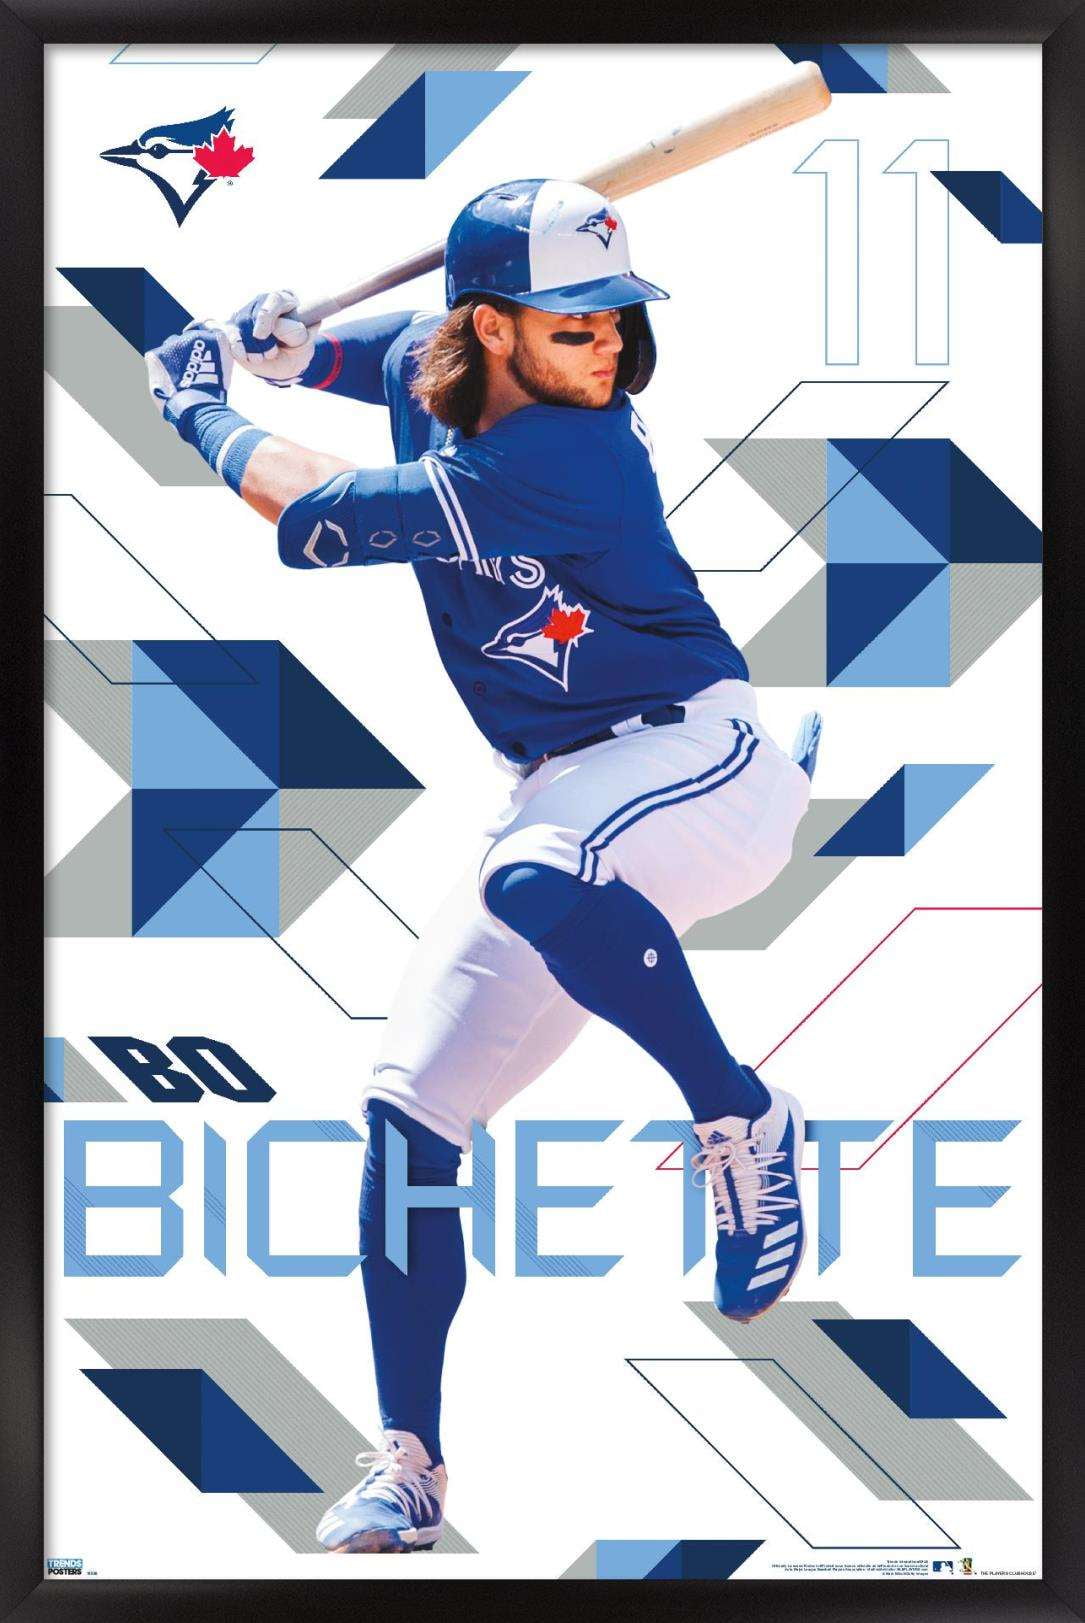 MLB Toronto Blue Jays Posters, Baseball Wall Art Prints & Sports Room Decor